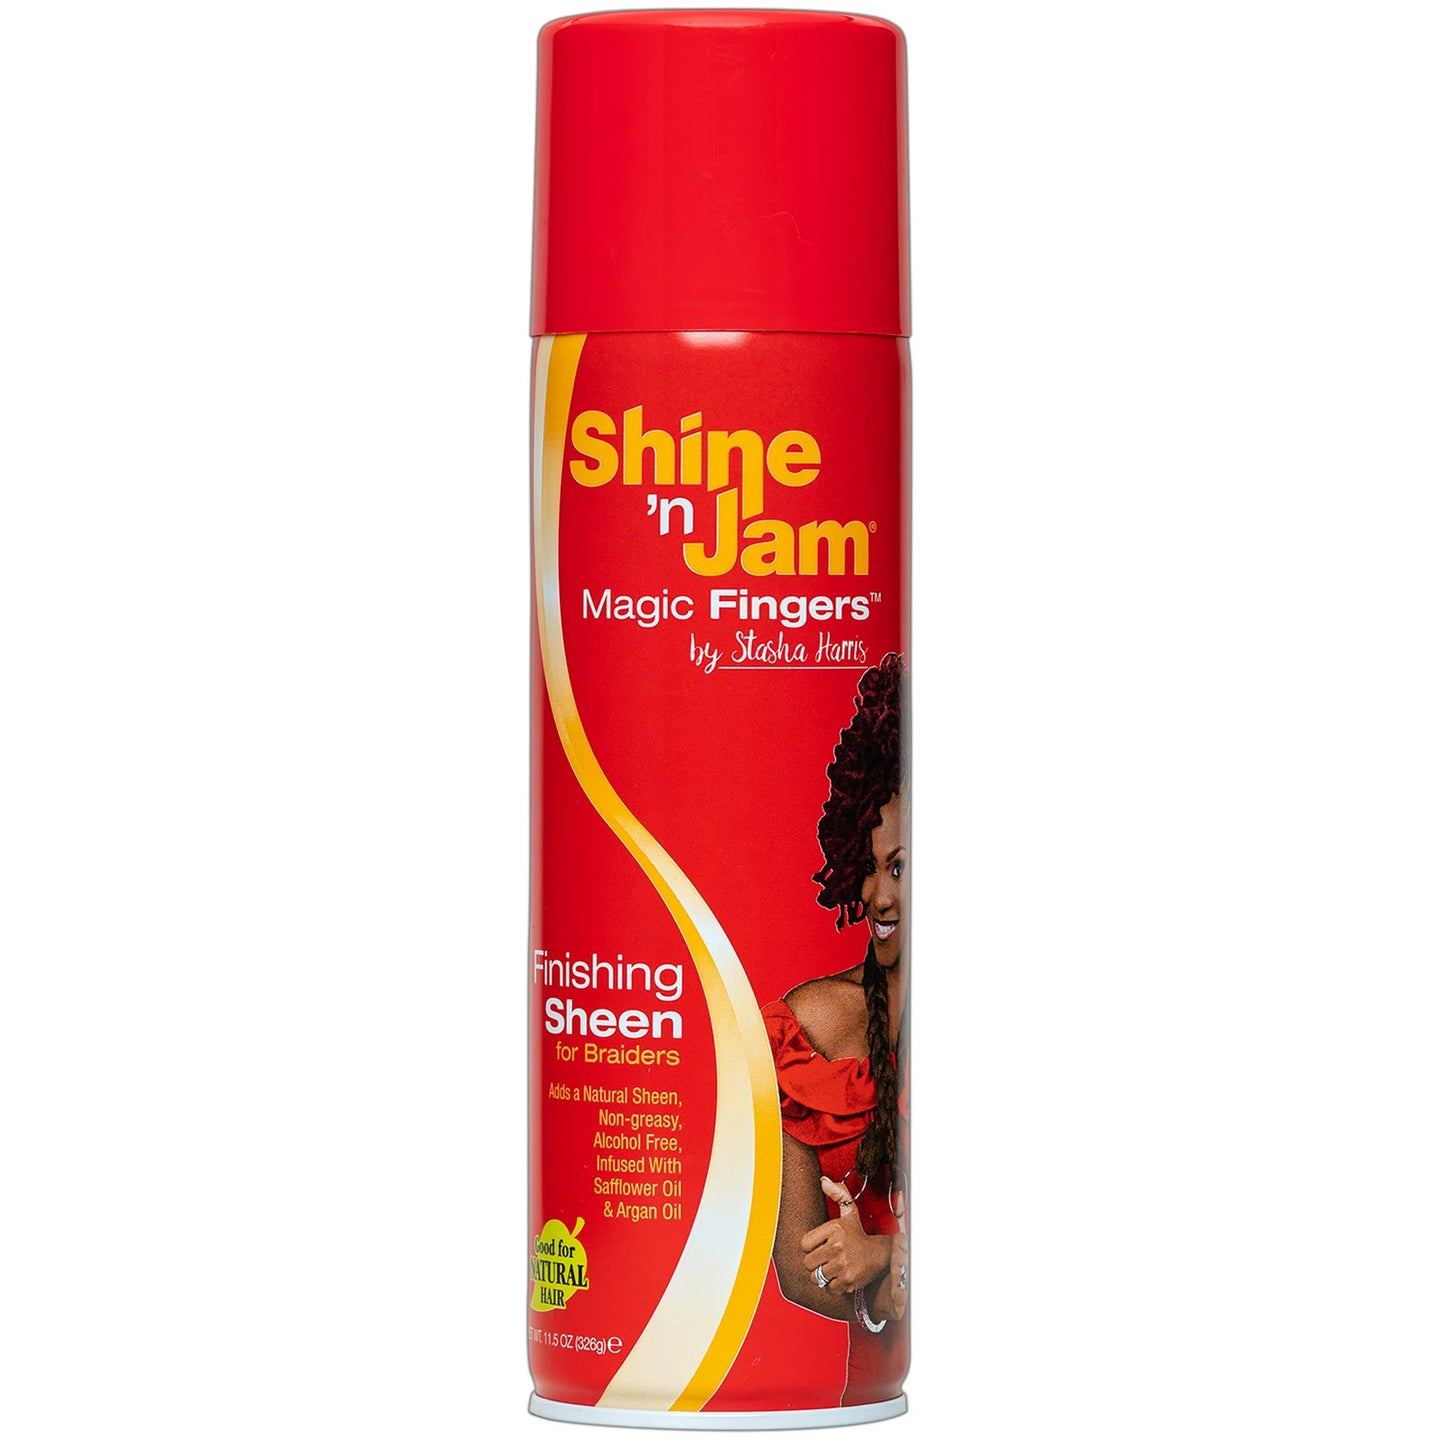 Ampro Shine n Jam Magic Fingers Finishing Sheen Spray - 11.5oz